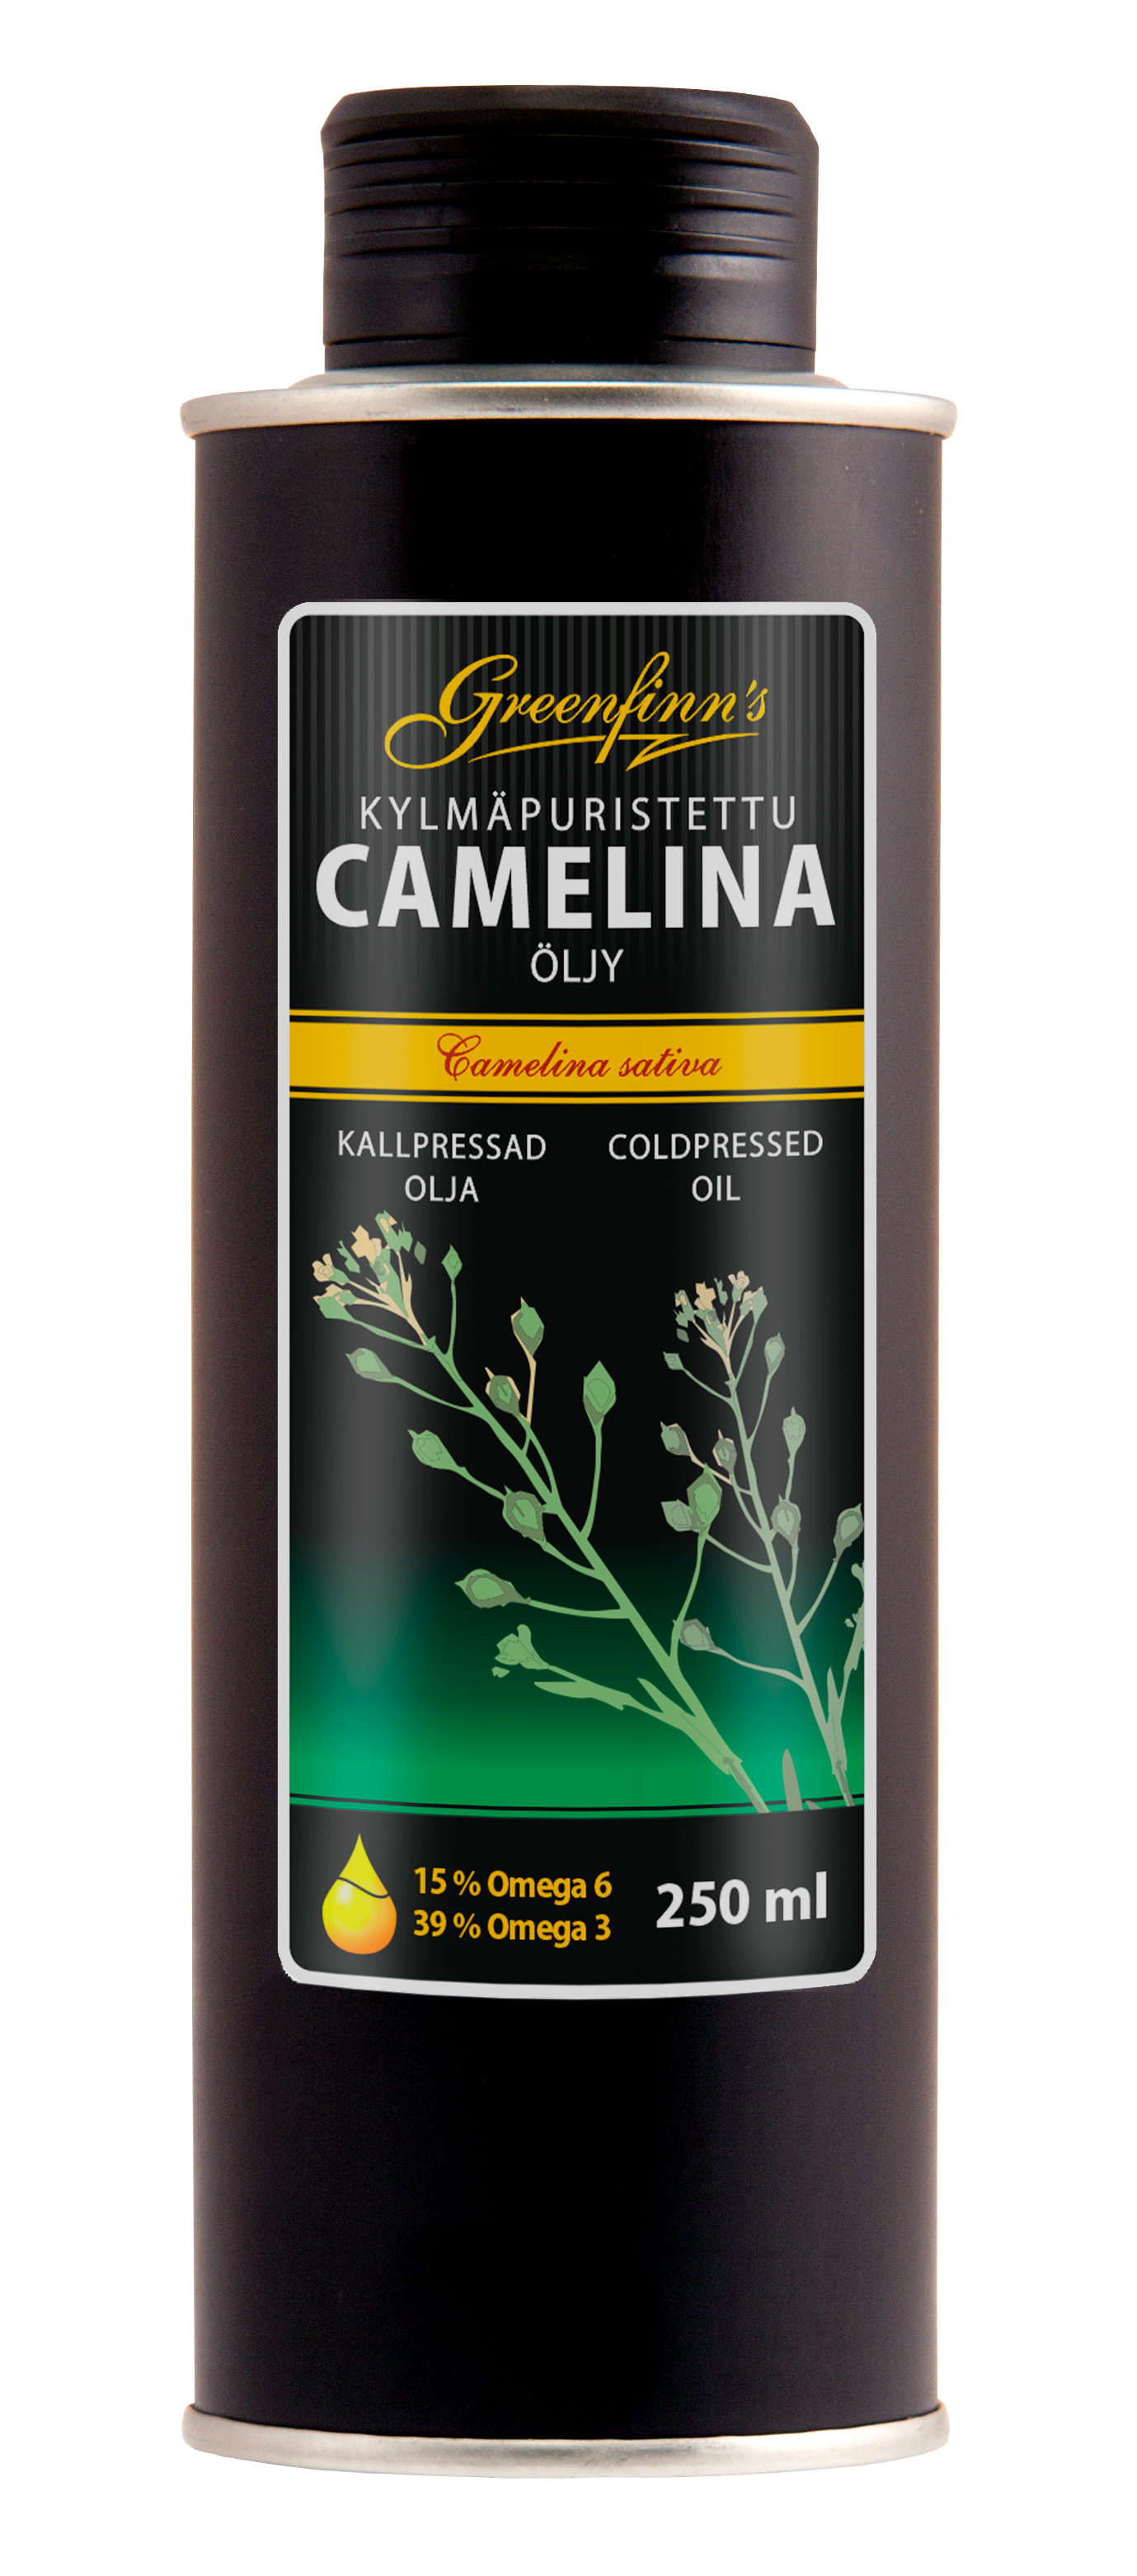 Greenfinn's Camelina-öljy